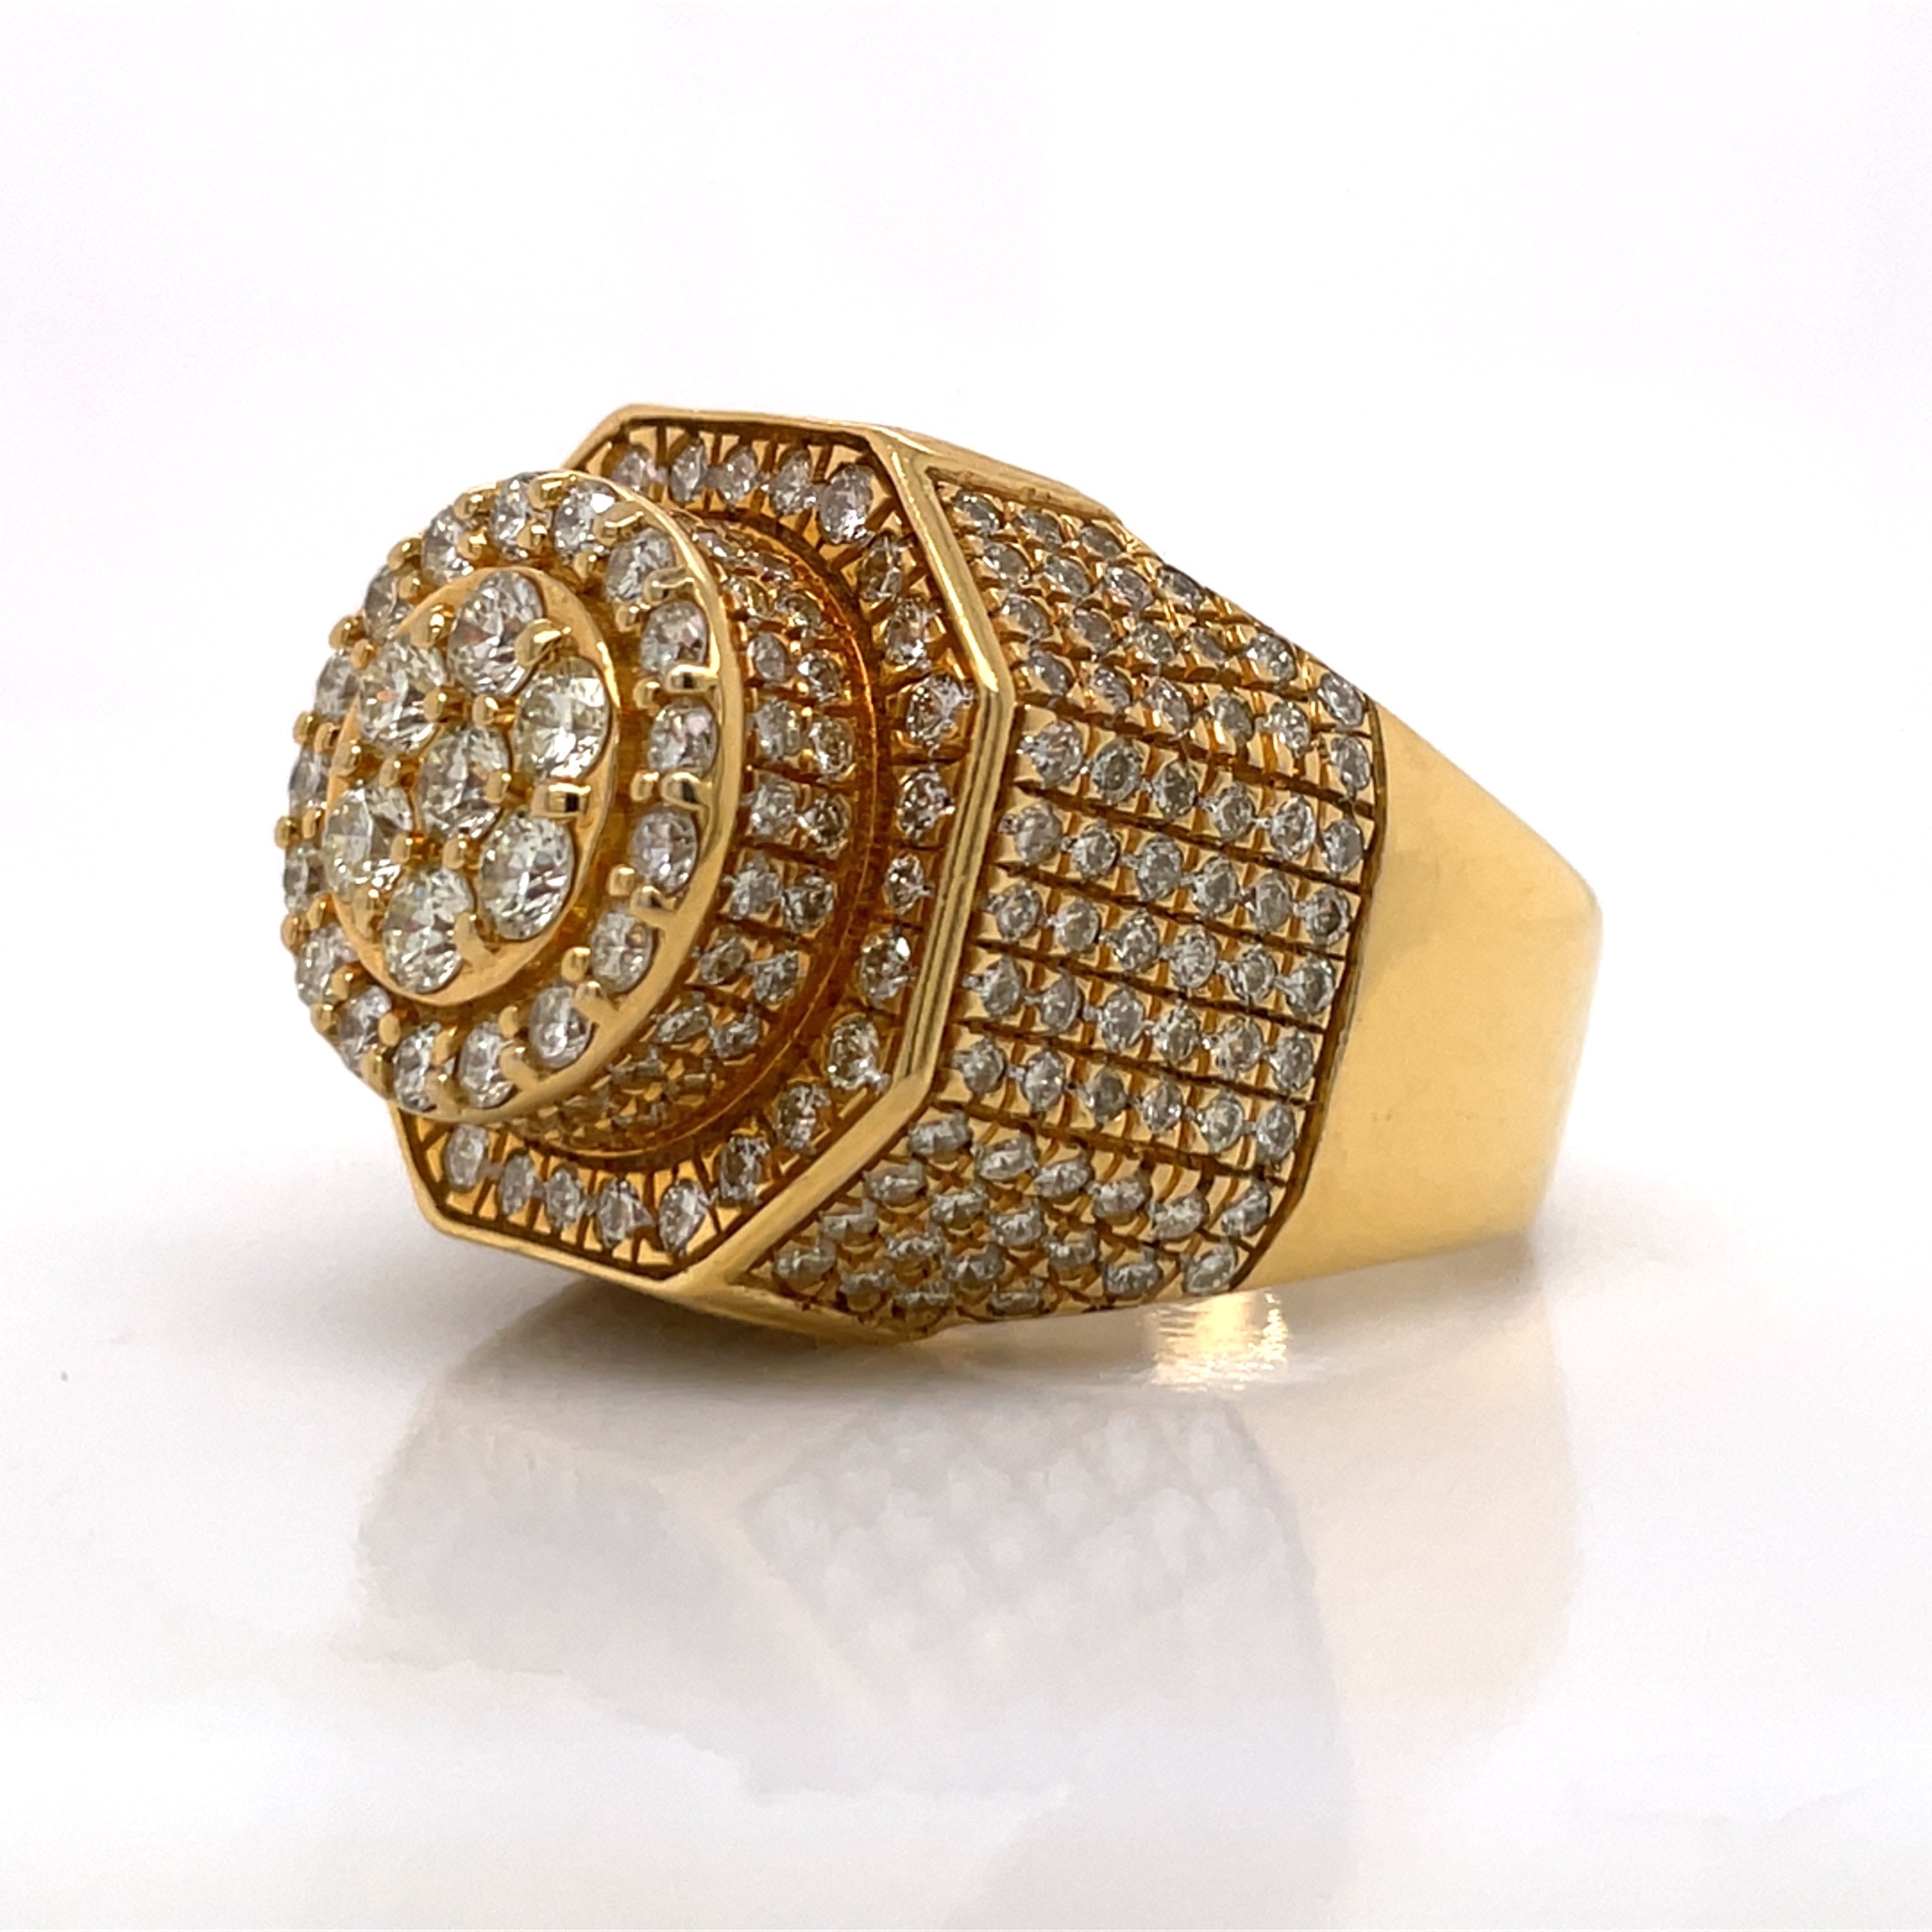 5.27 CT. Diamond Ring 10KT Gold - White Carat Diamonds 